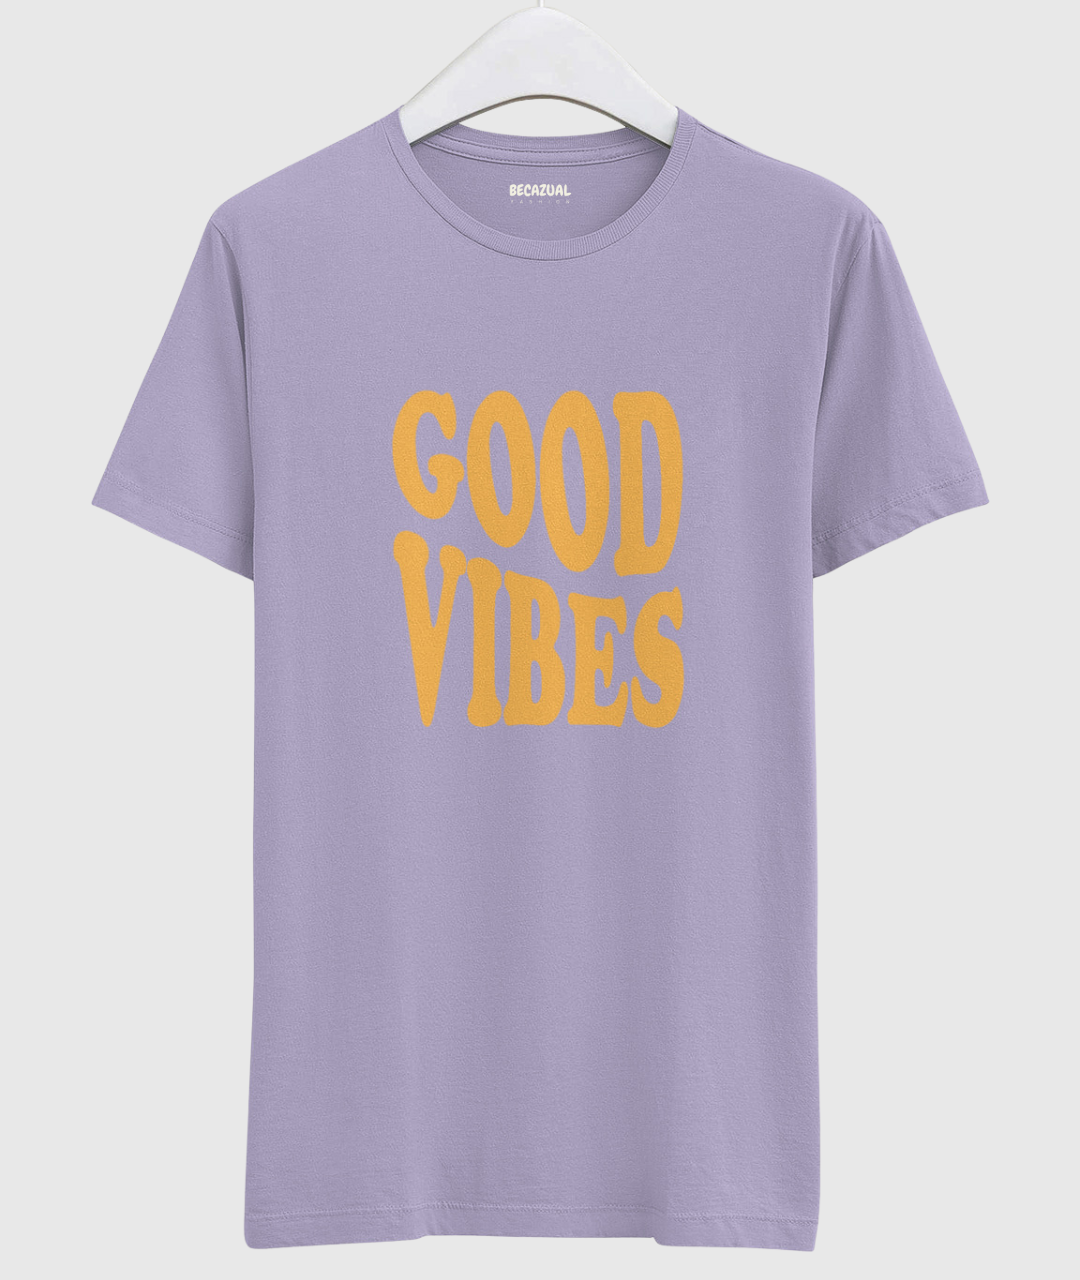 Good Vibes Unisex Regular Fit T-shirt